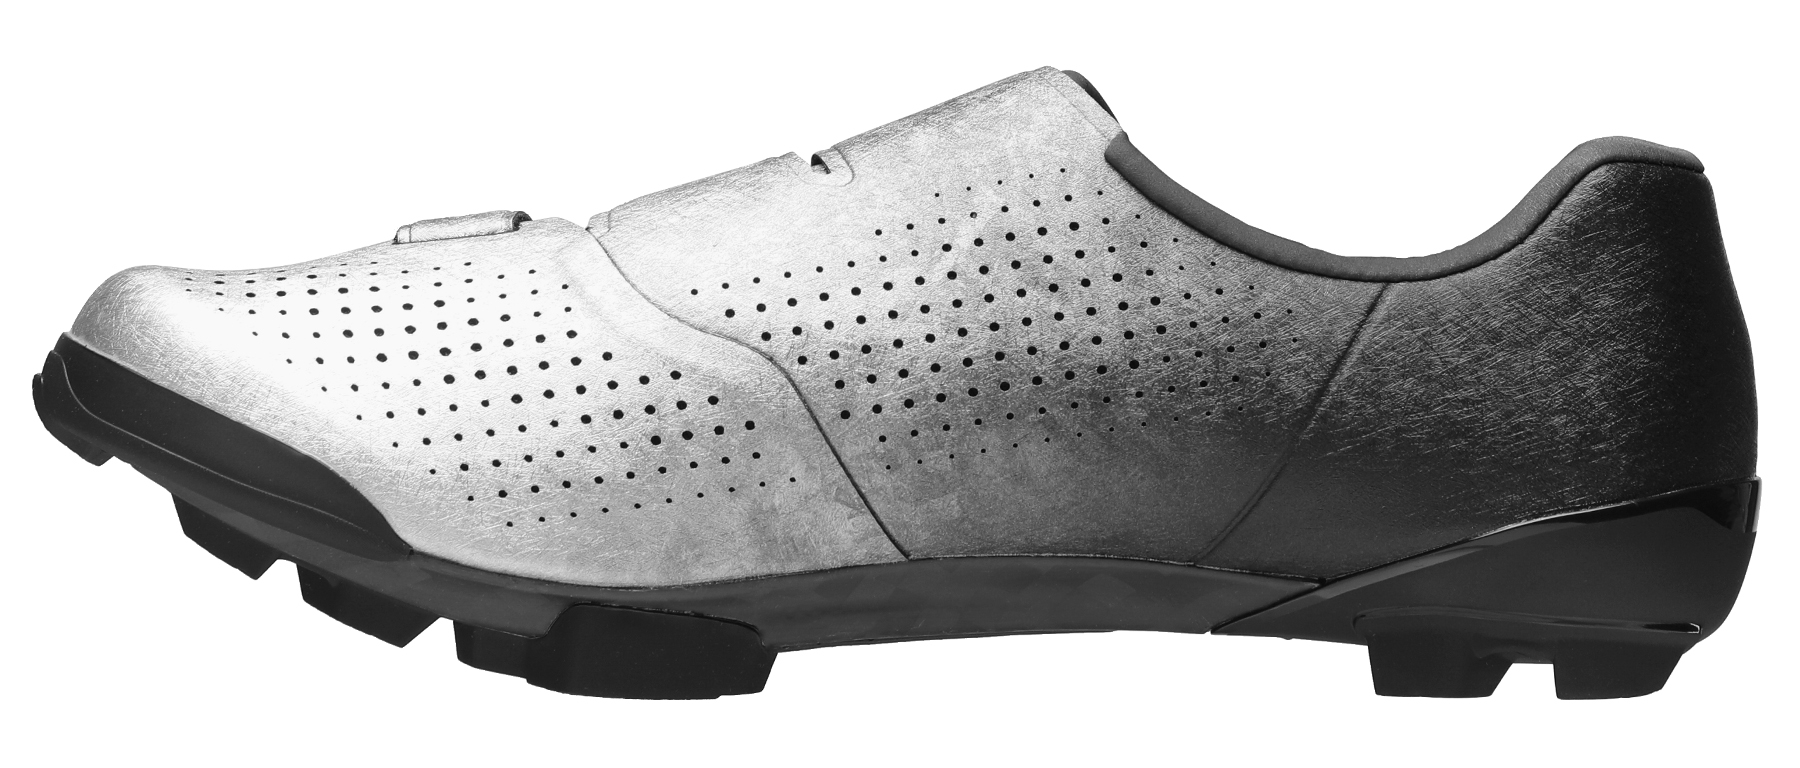 Shimano SH-RX801 Gravel Shoes